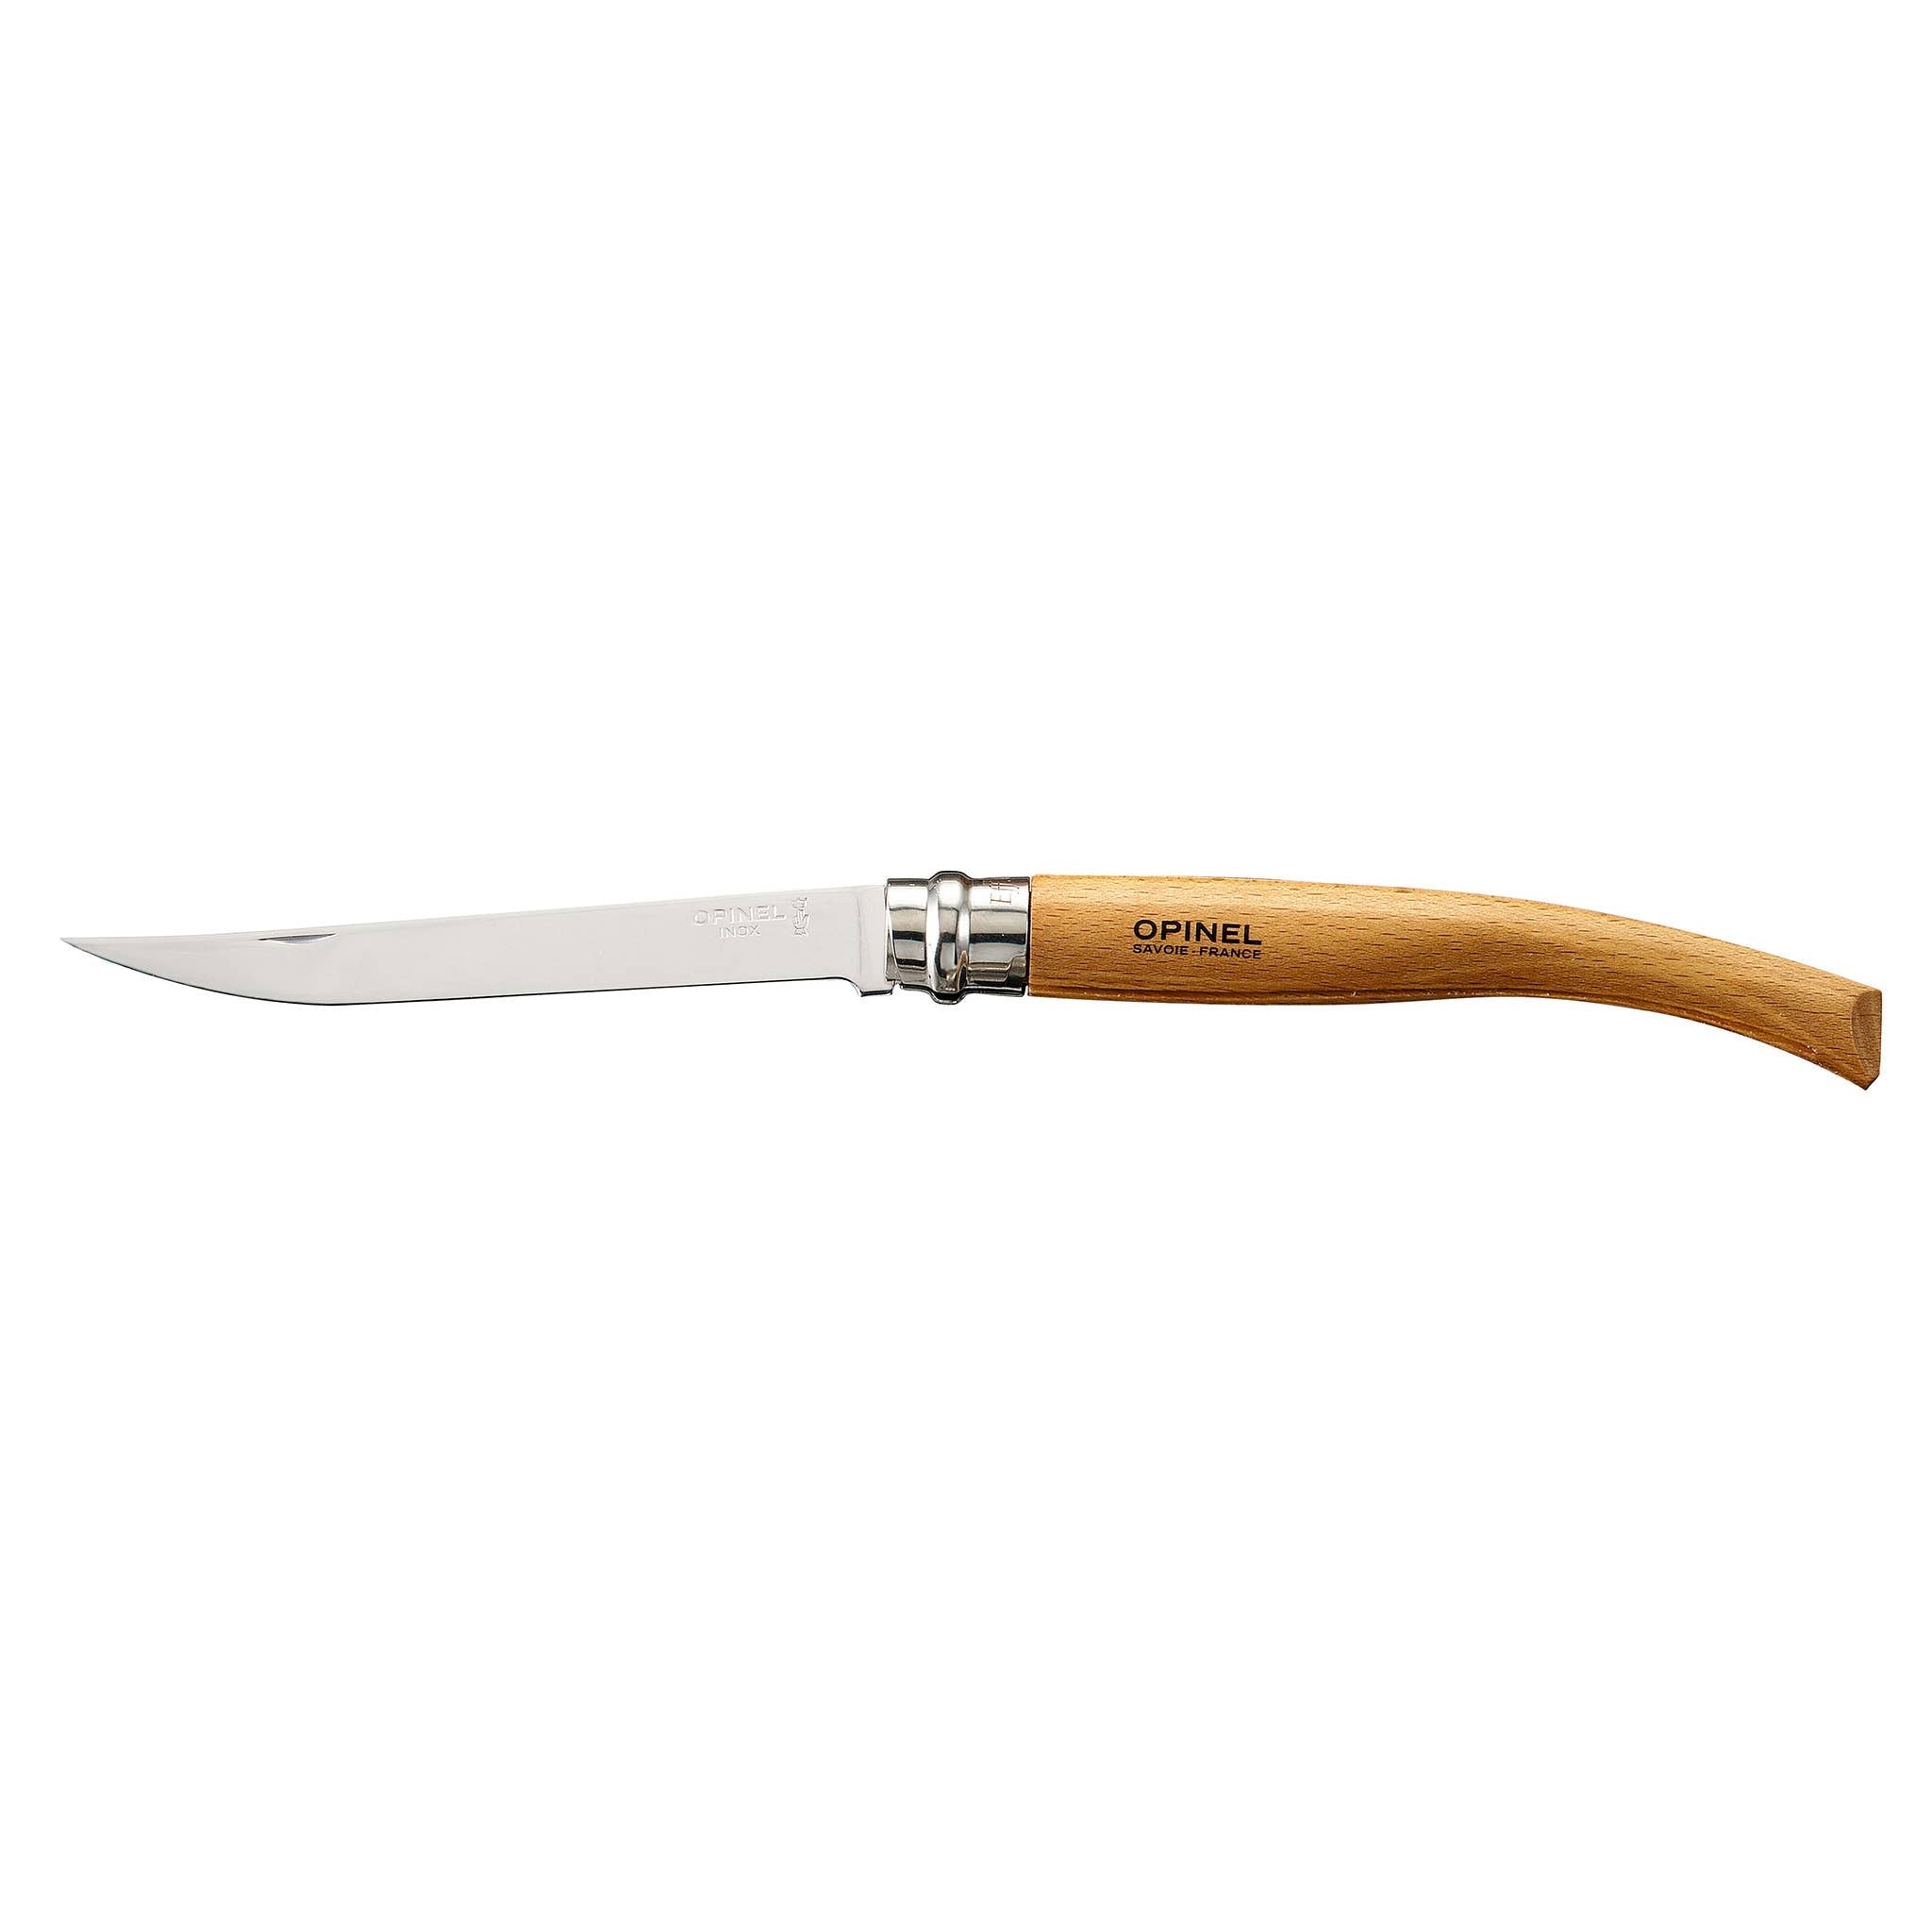 No. 12 Slim Beech Wood Folding Knife